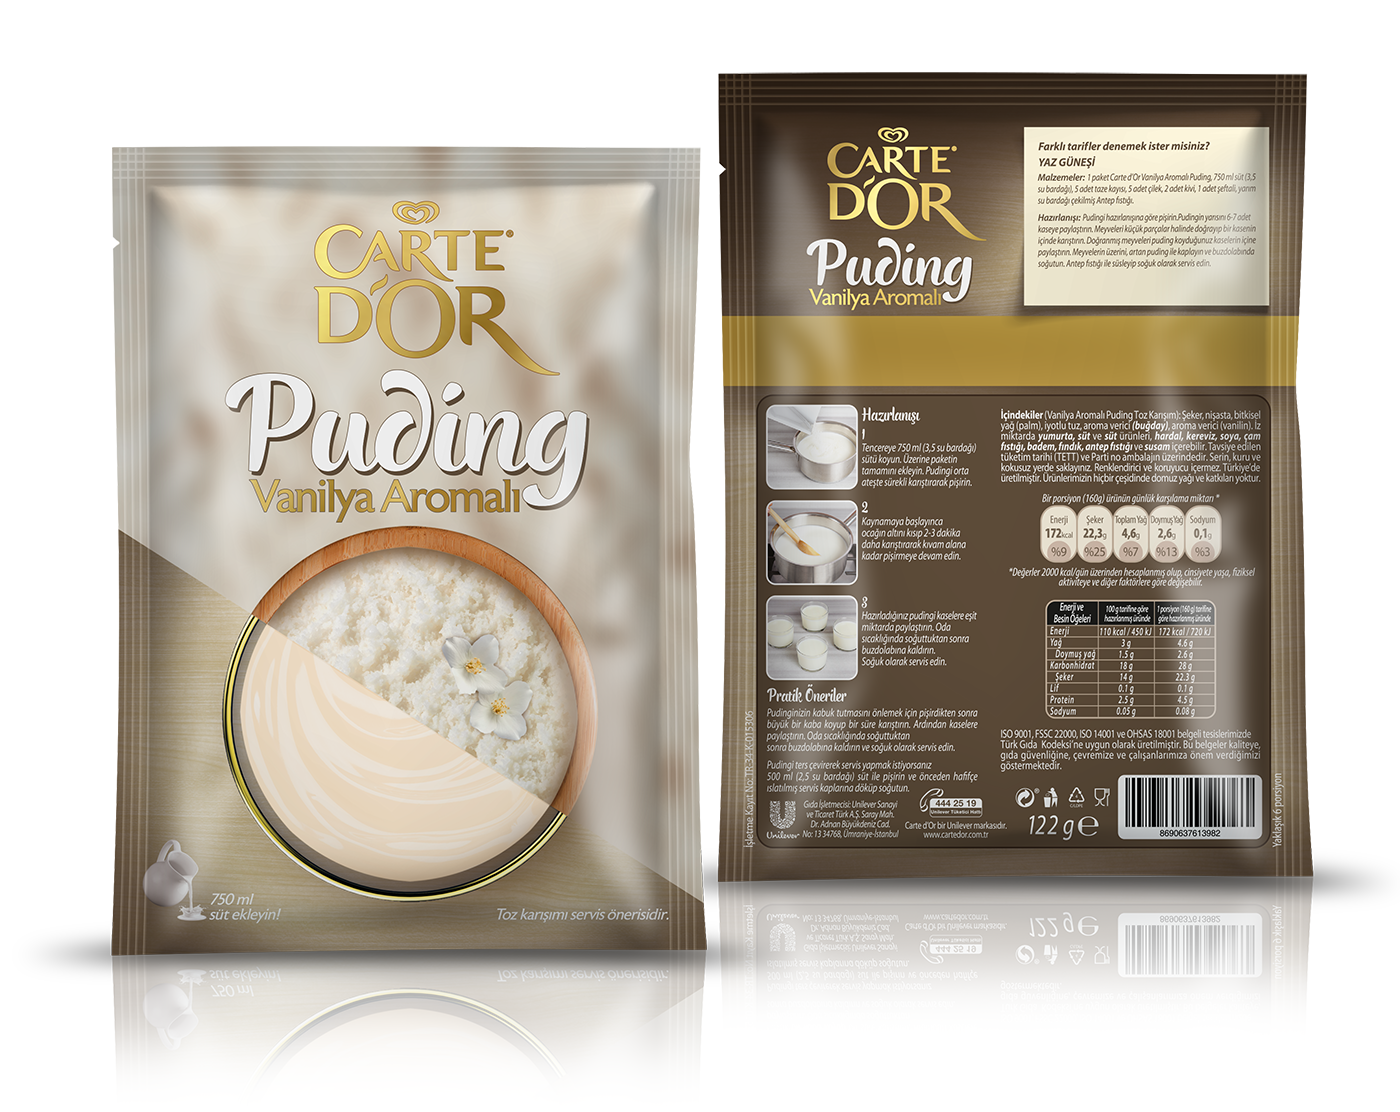 cartedor carte d'or instant dessert instant pudding Pudding Unilever chocolate tasarımüssü tasarım üssü